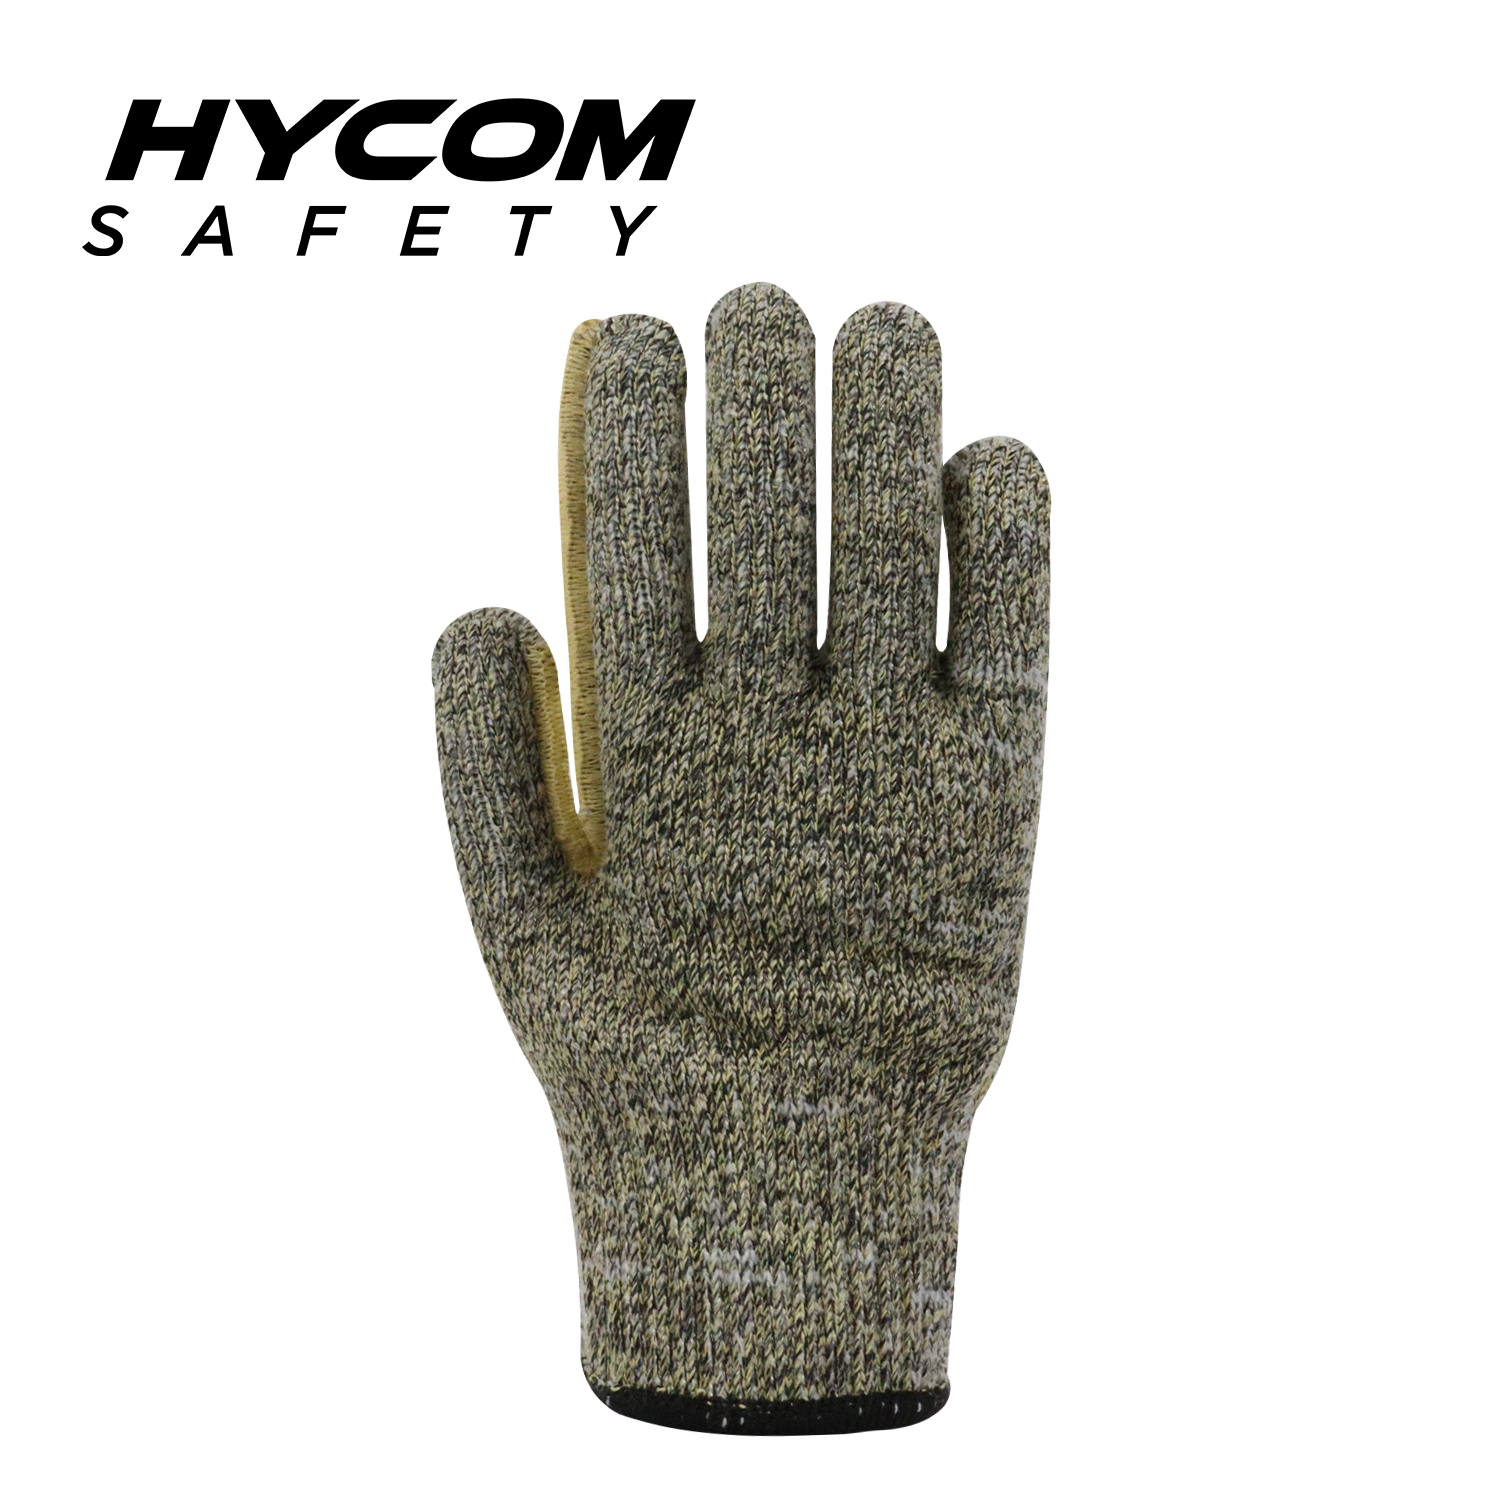 HYCOM 7G ANSI Cut 5 Hitzebeständiger Handschuh Aramid-Handschuh mit hohem Schnitt